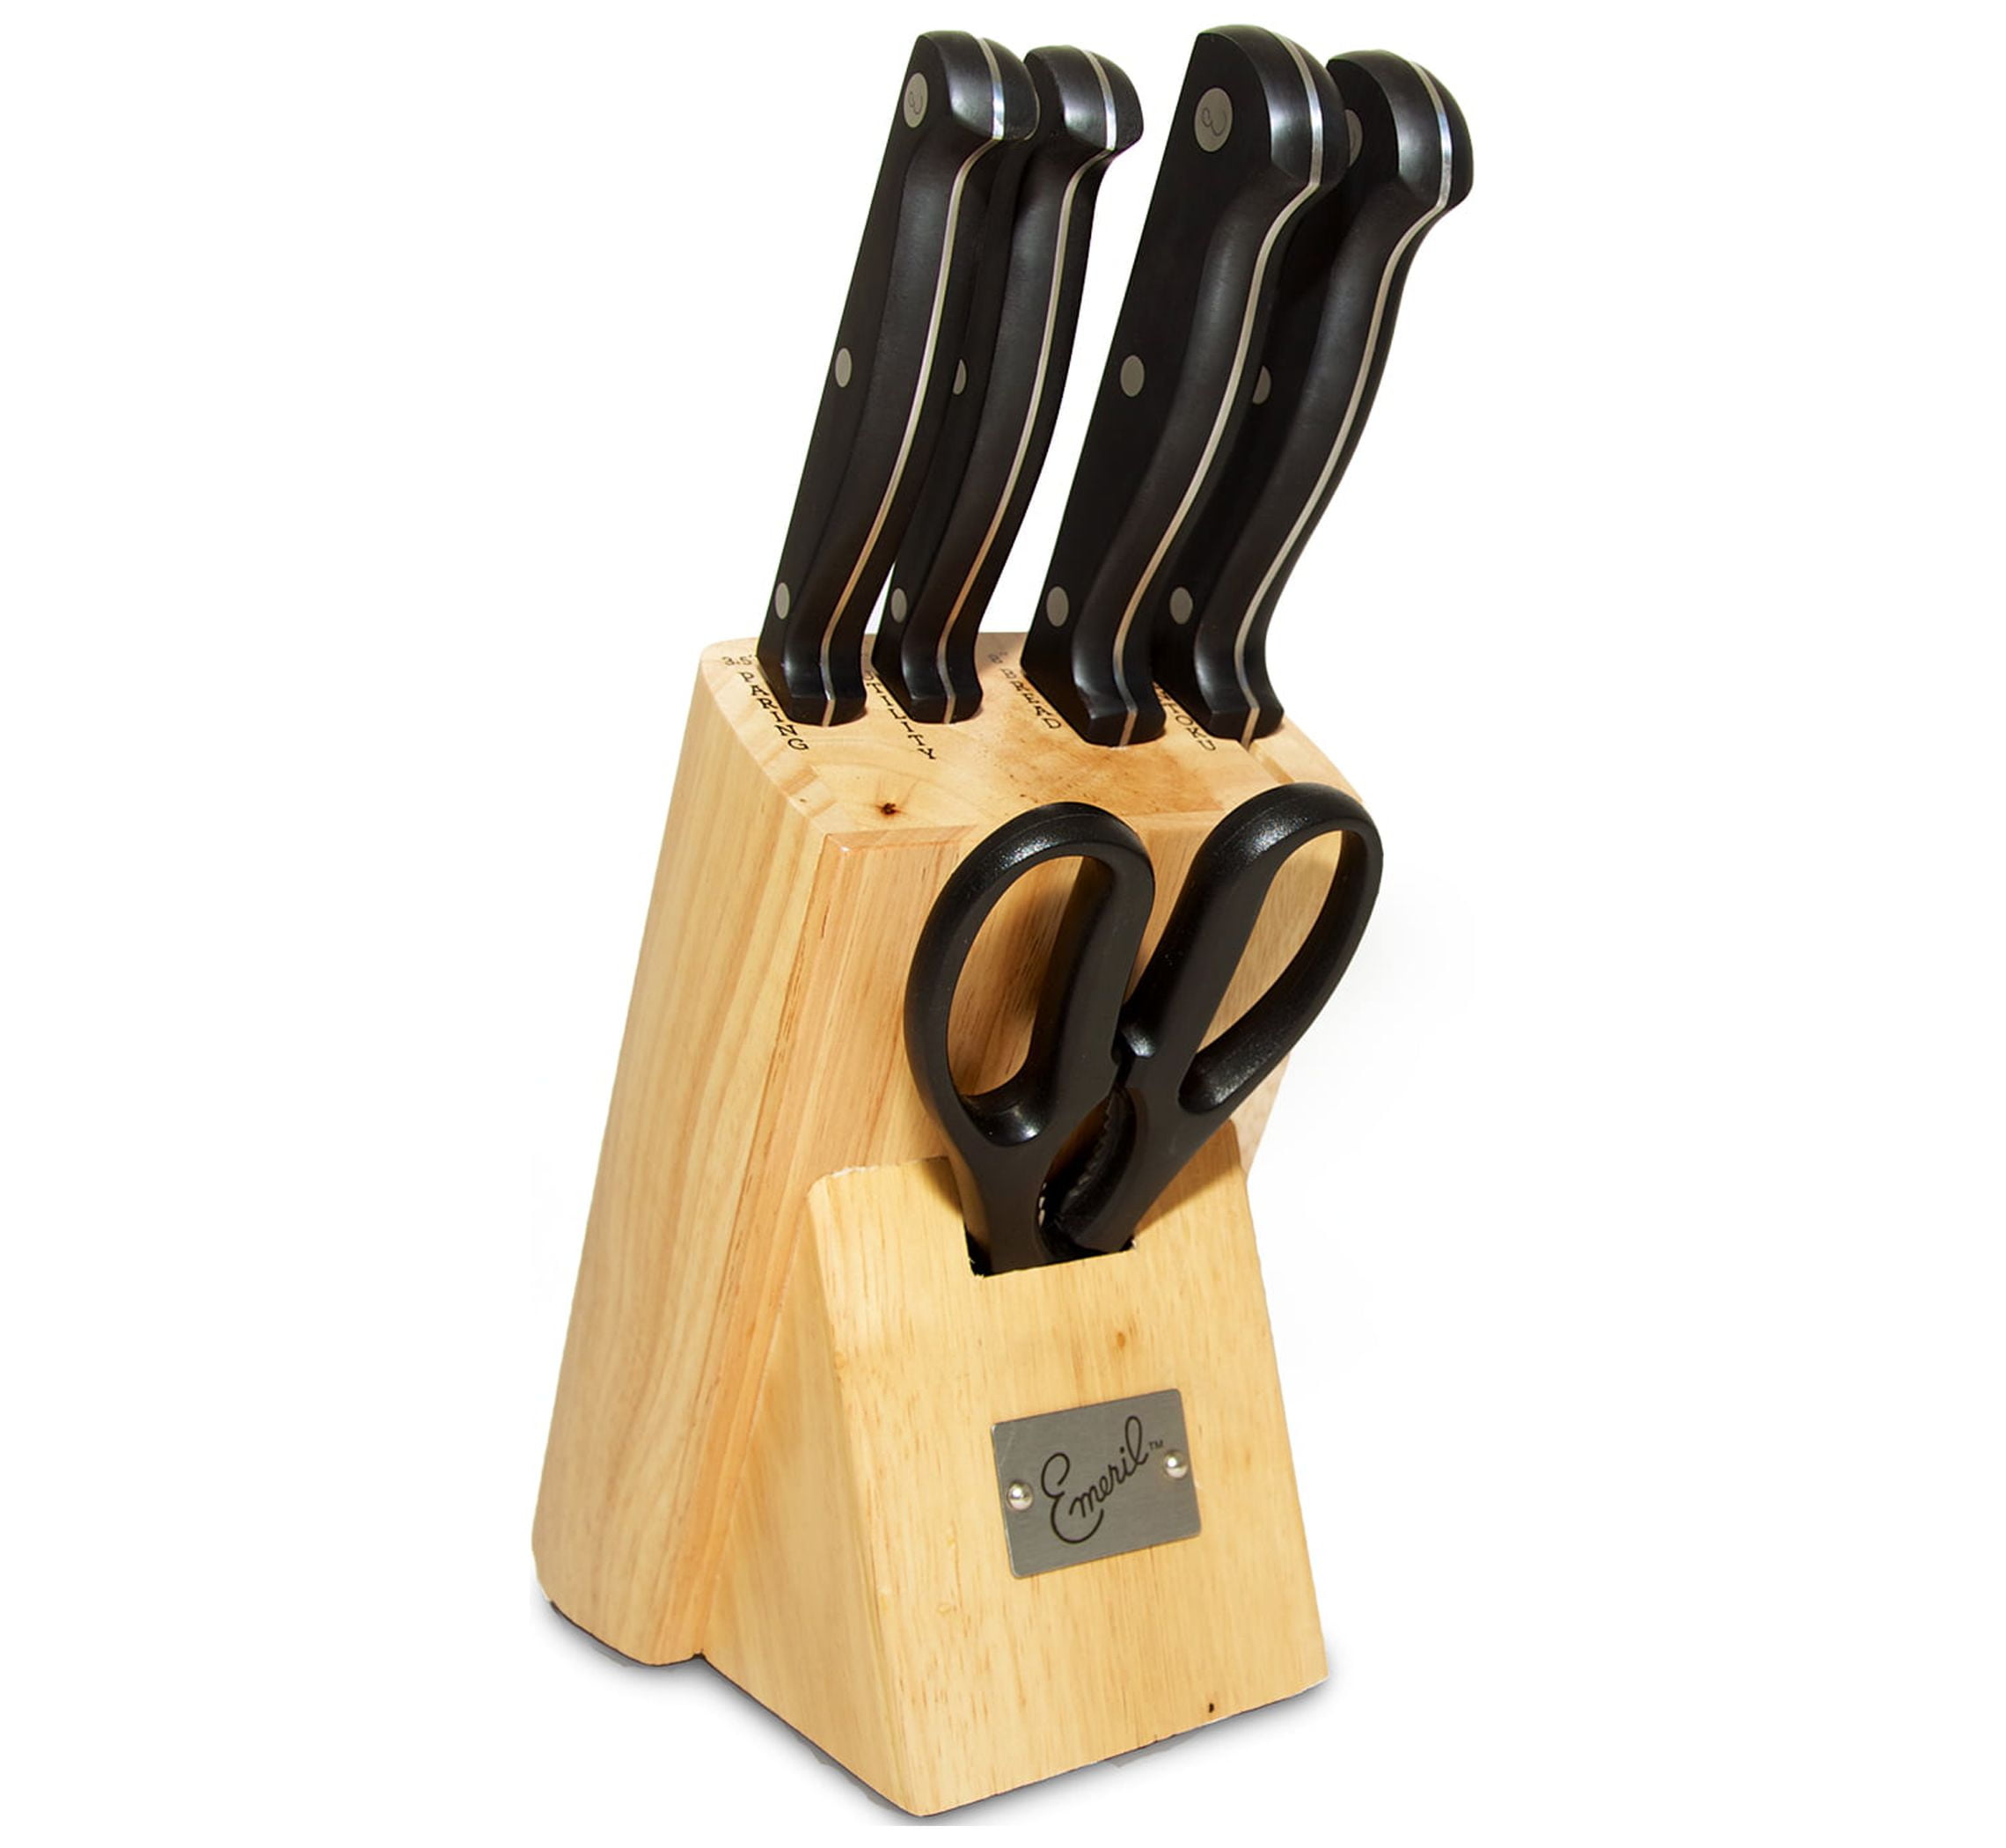 Emeril 15 Piece Hollow Handle Cutlery Set, Black Block